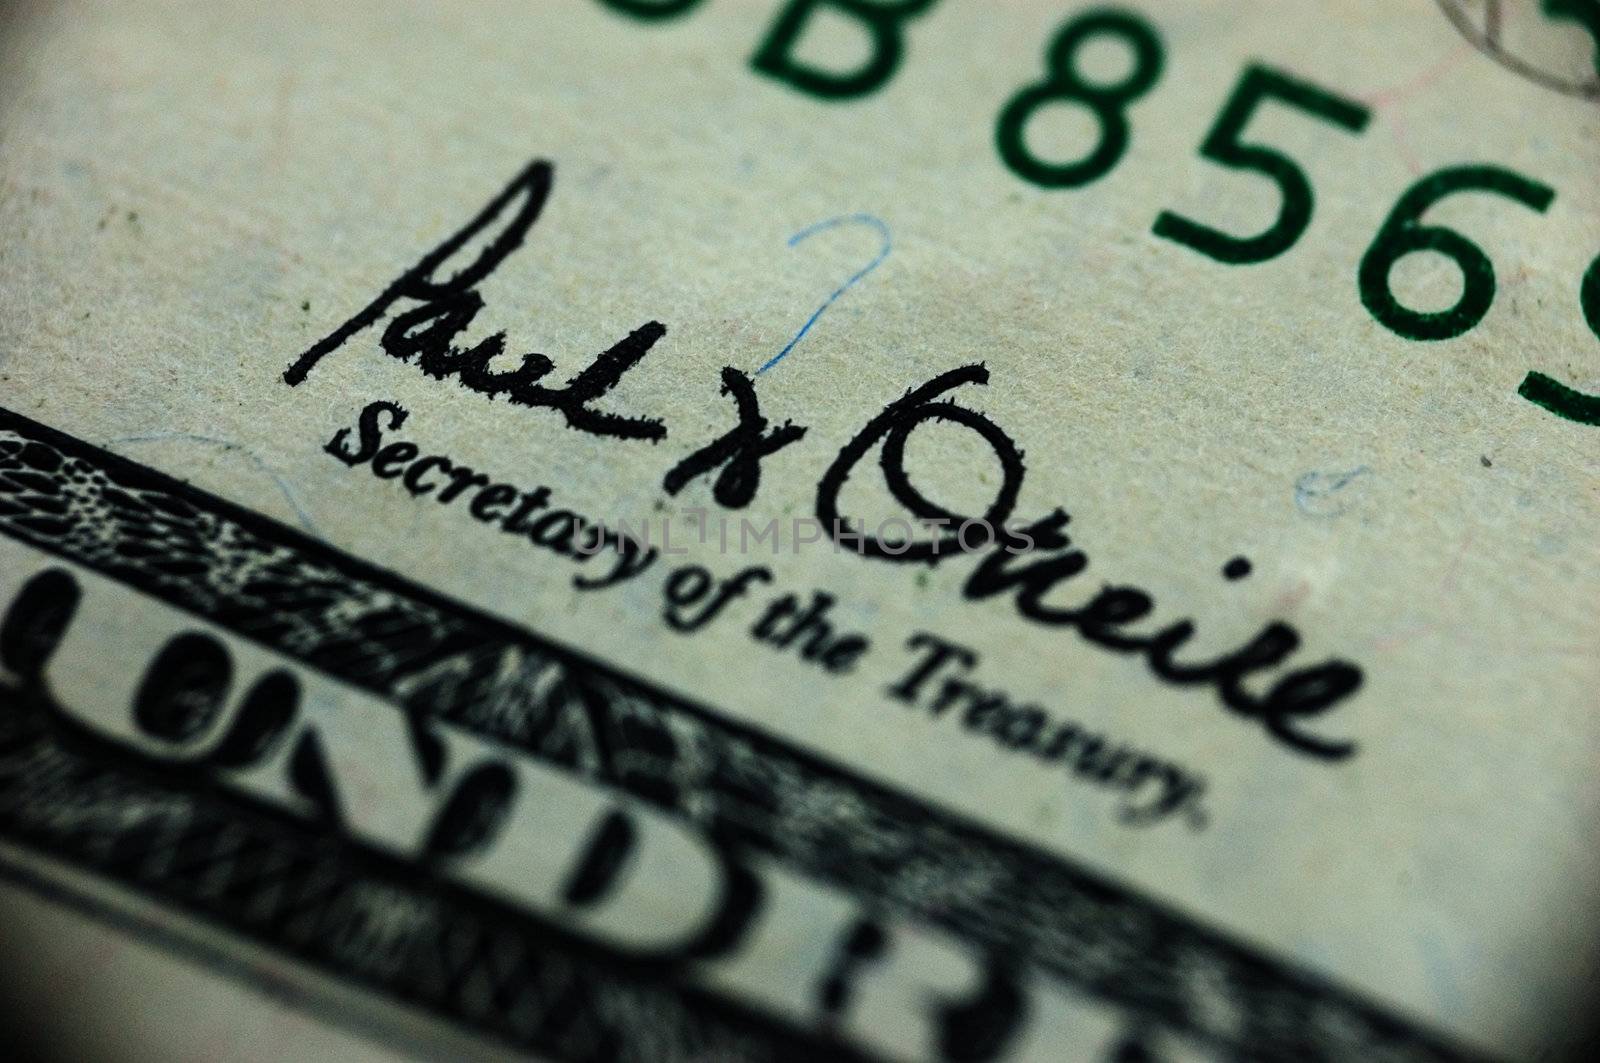 macro of one handred dollars - sign of Secretary of the treasury